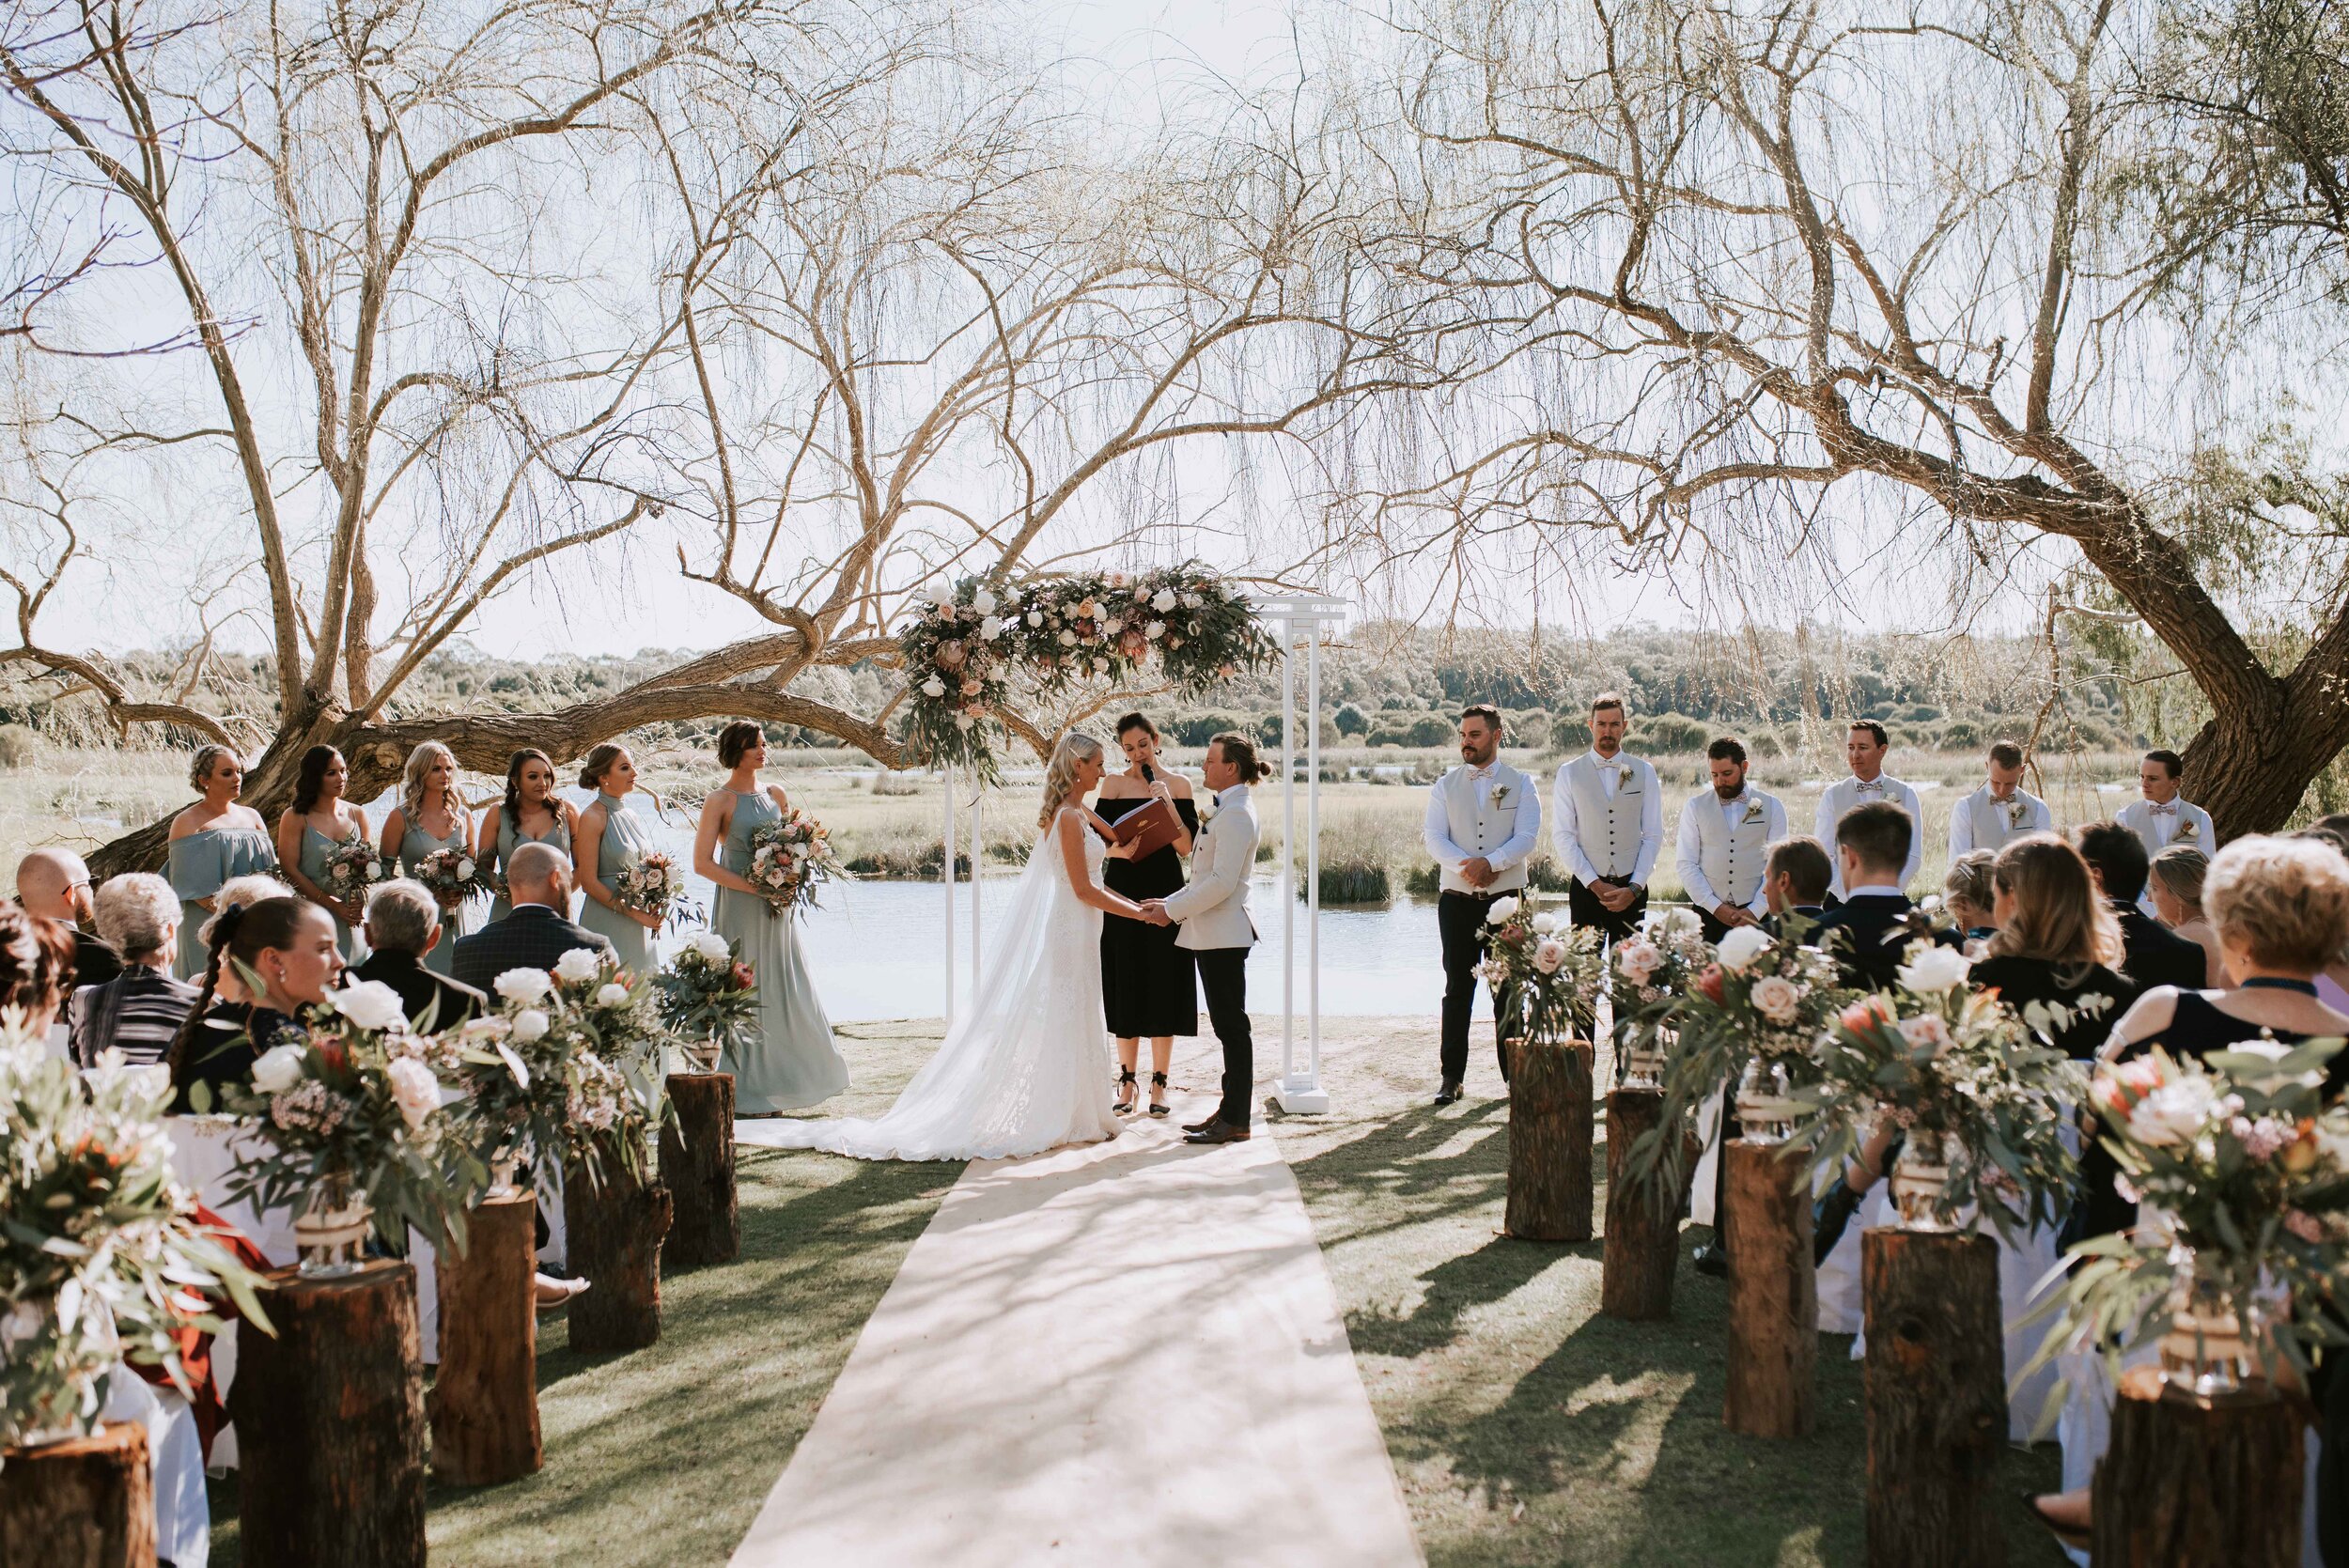 Yanchep park beautiful spring wedding | Perth wedding photographer Amy Skinner-351.jpg